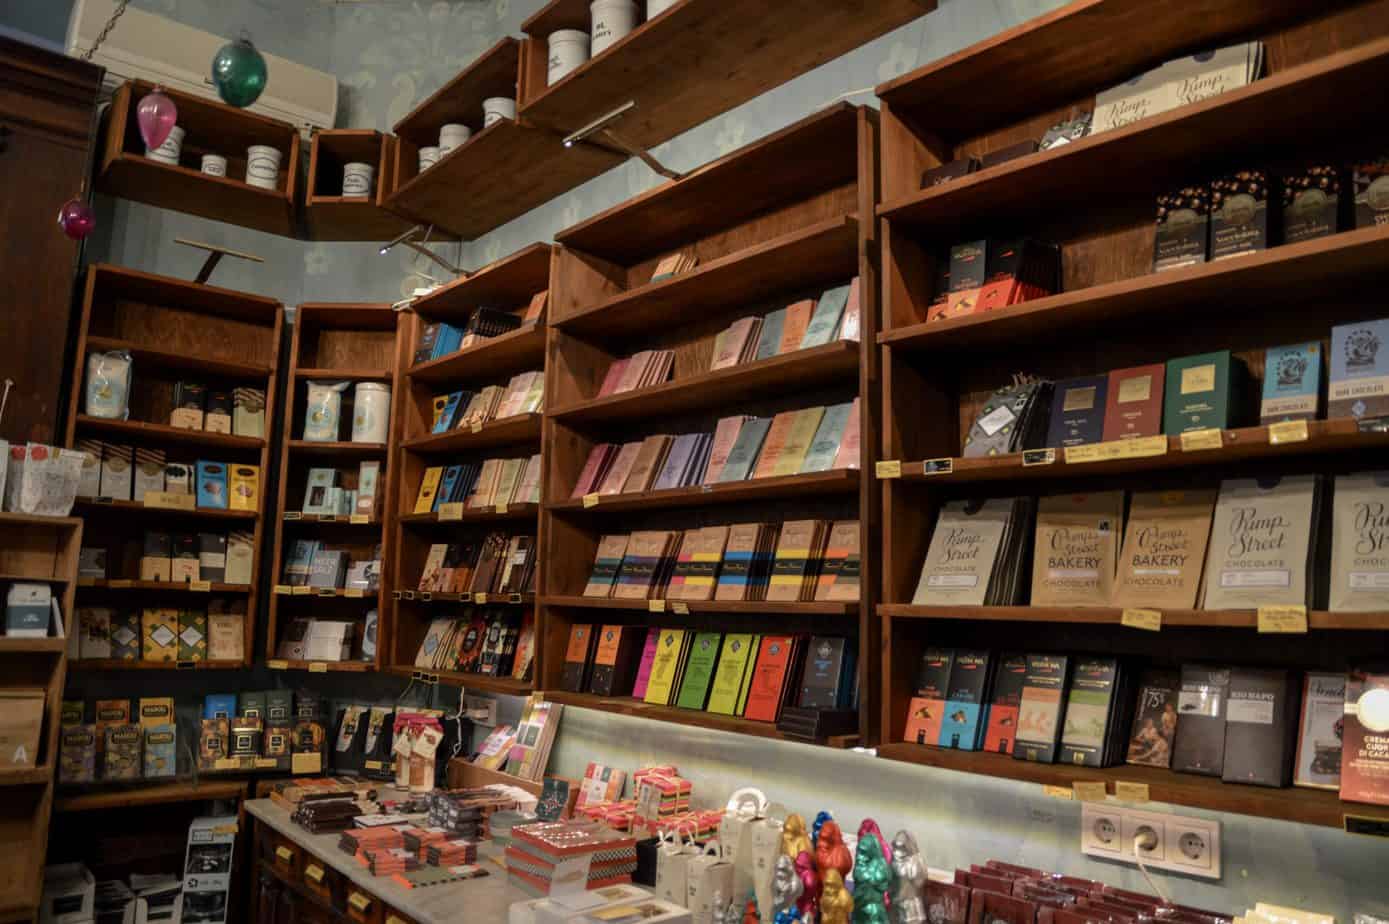 A book shelf filled with books inside a shop.